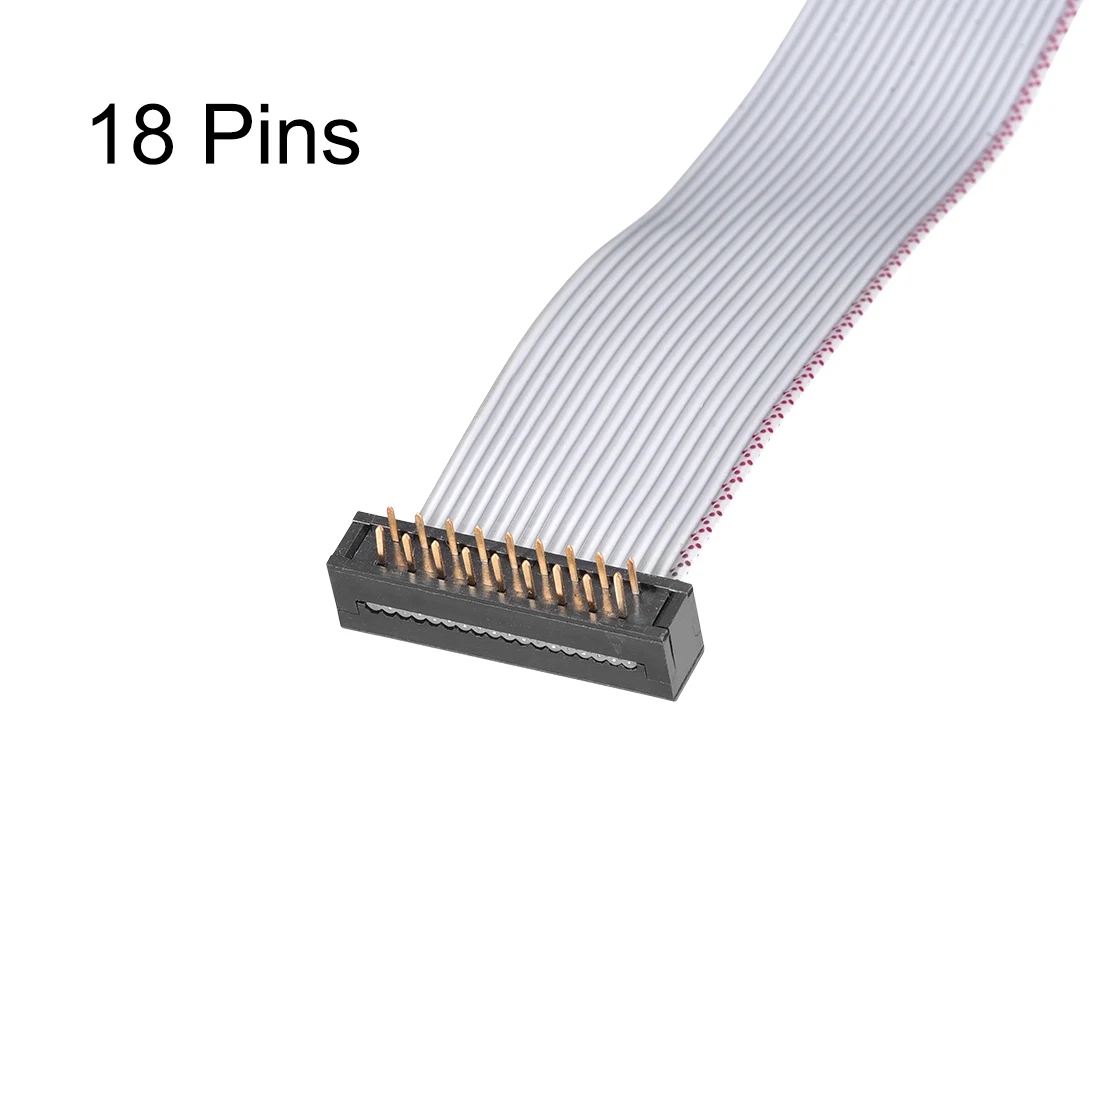 Uxcell 1 шт. IDC провода плоский кабель FC/FD разъем a-тип 2,54 мм Шаг 0,2 м Длина для цифровых камер Ноутбуки ЖК-телевизоров